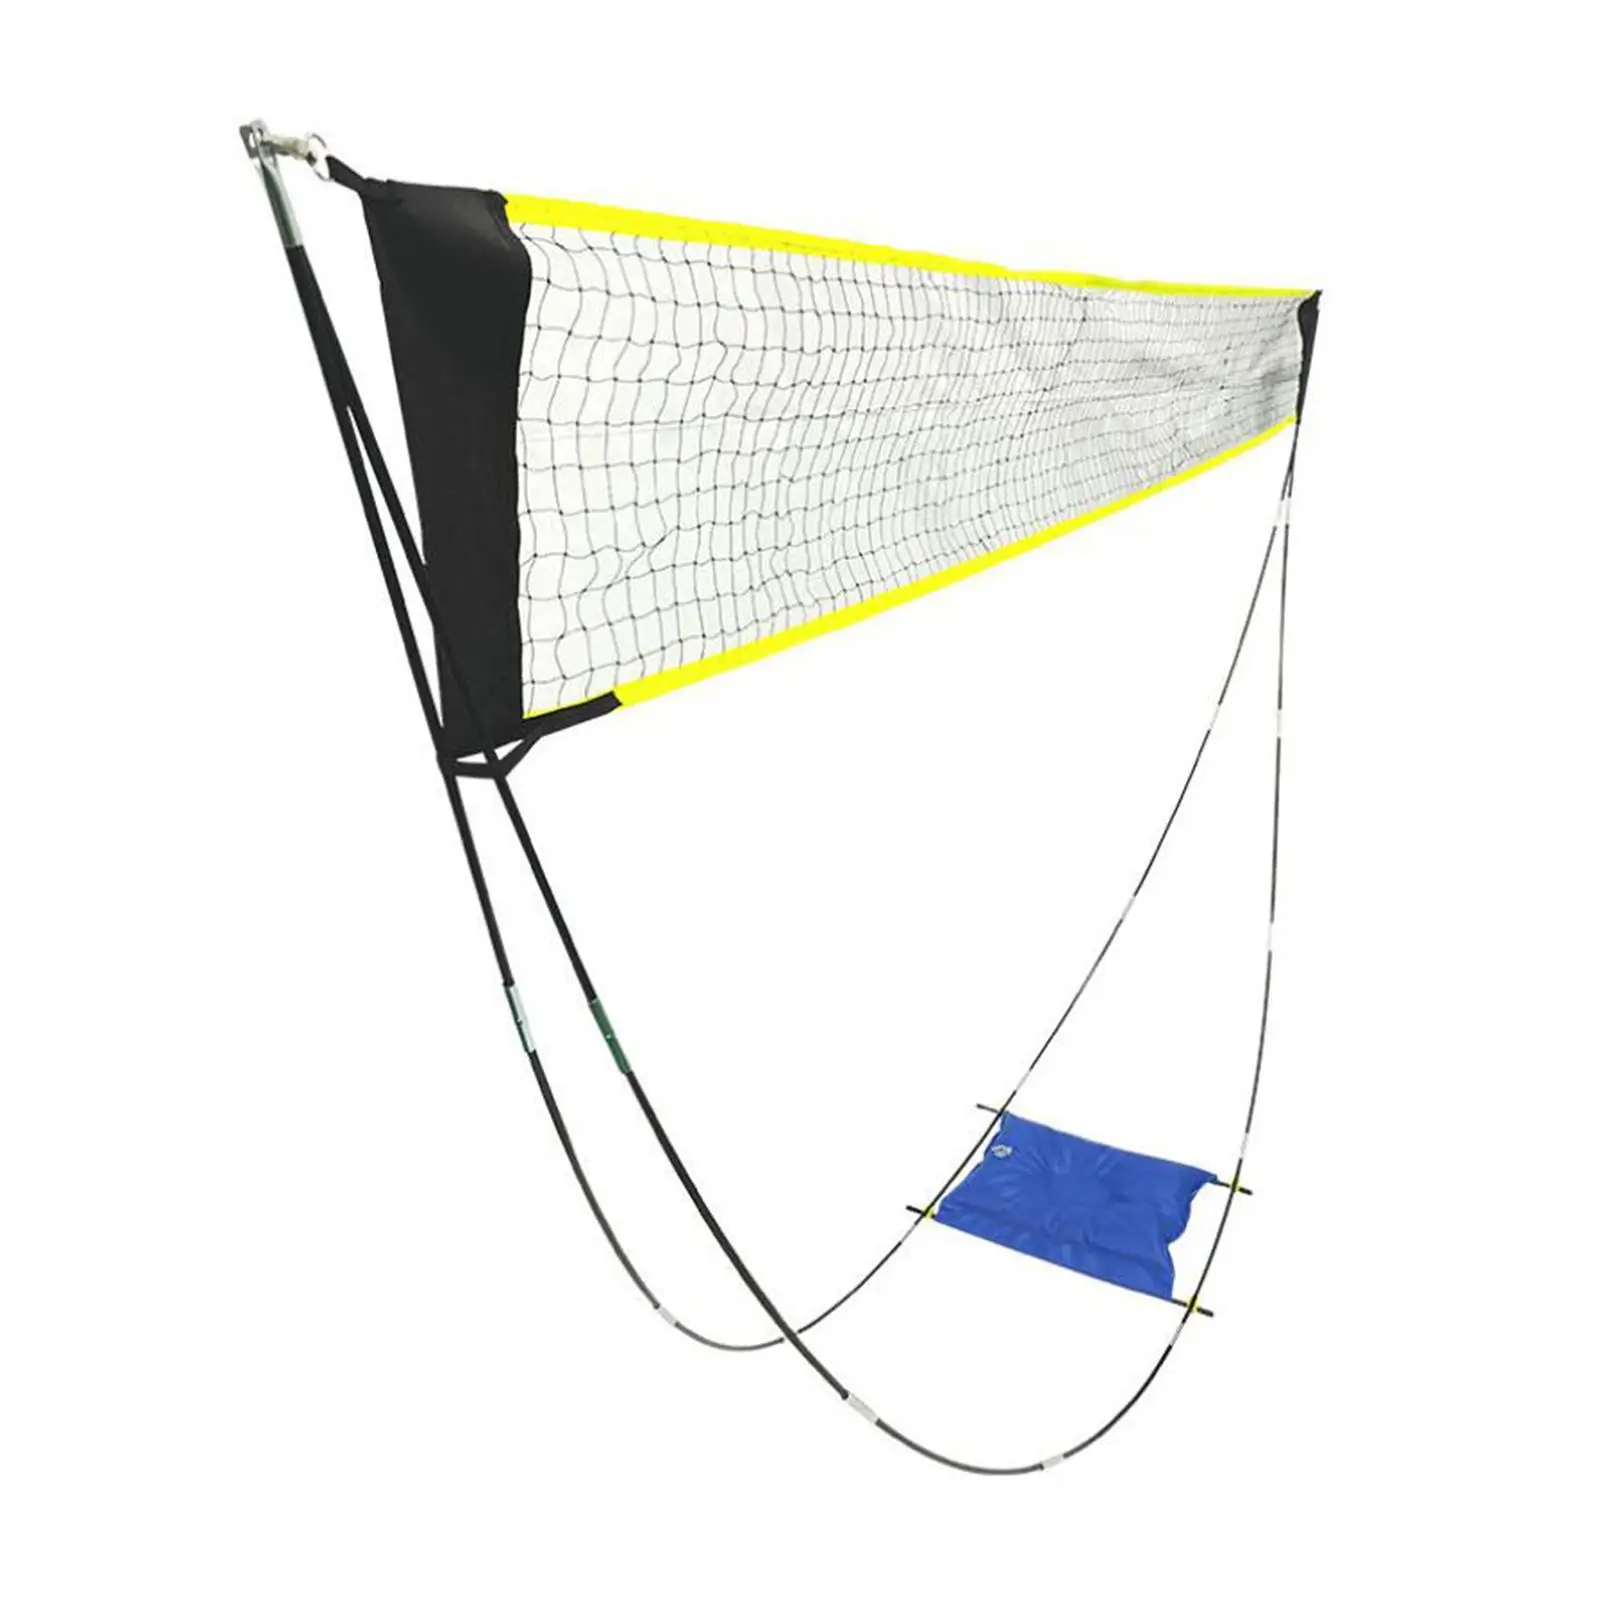 Portable Badminton Net Pickleball Net Portable Heavy Duty Easy to Assemble Beach Net Set for Park Training Garden Match Backyard